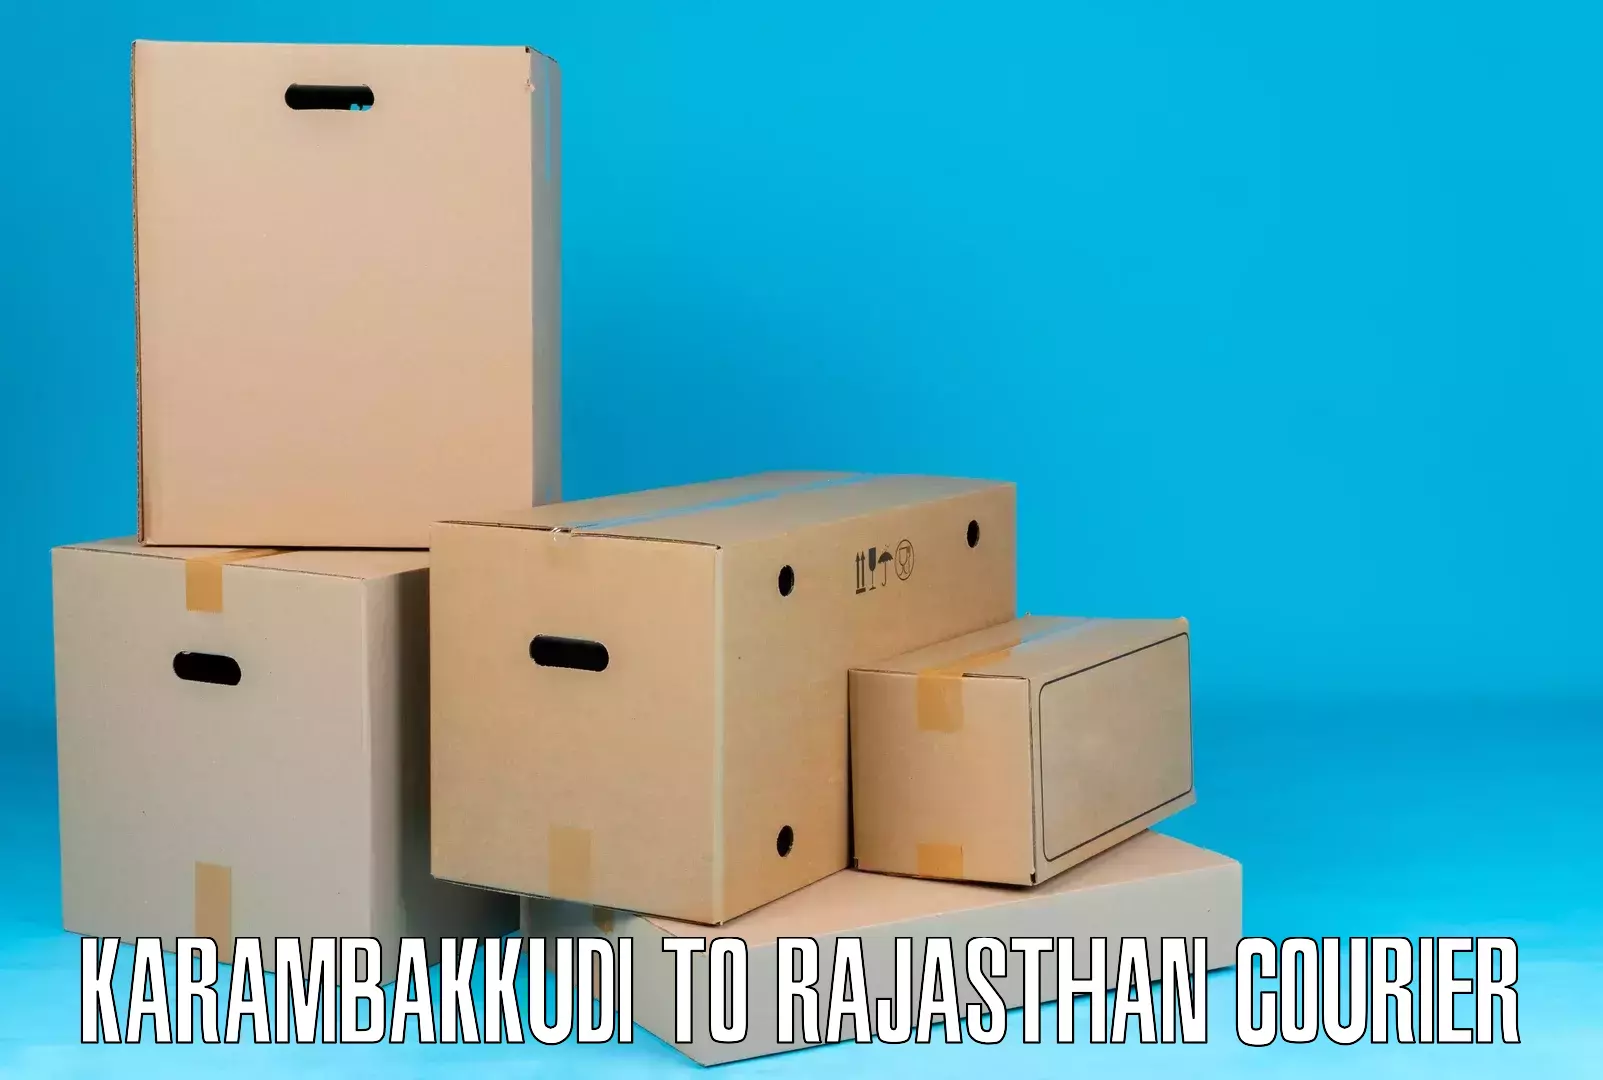 Optimized delivery routes in Karambakkudi to Rajasthan